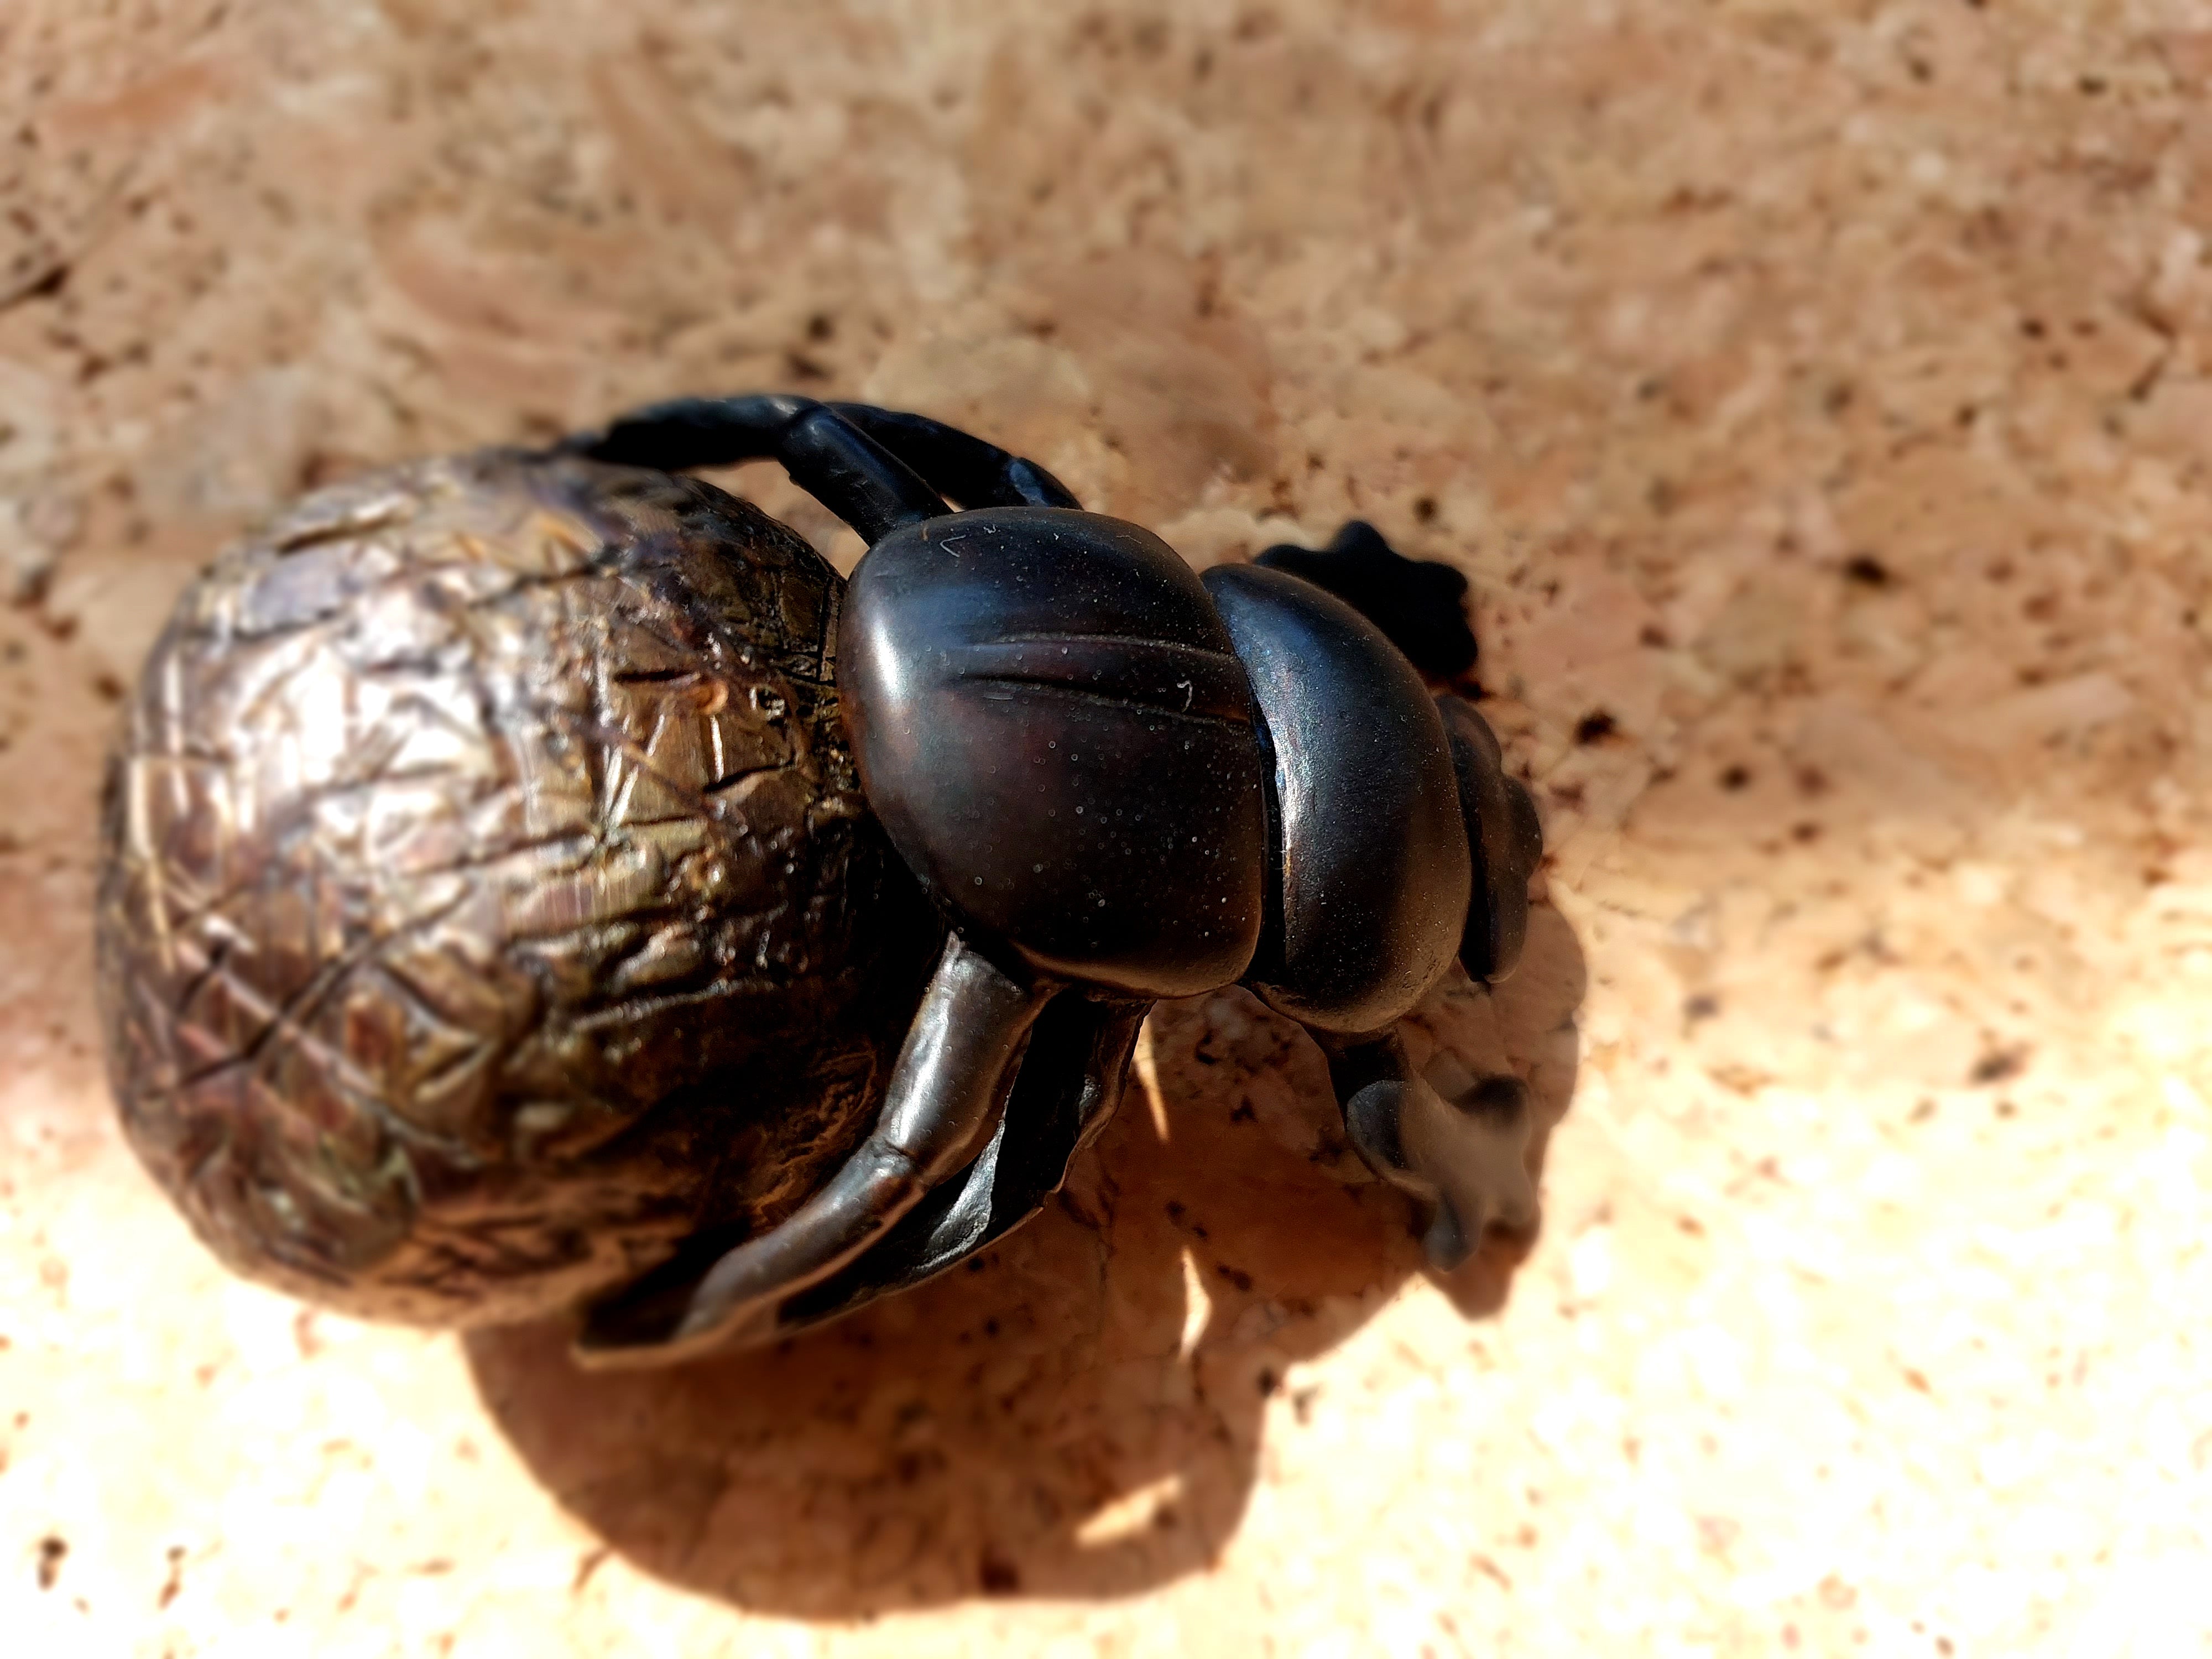 Dung beetle by Robbie Leggat